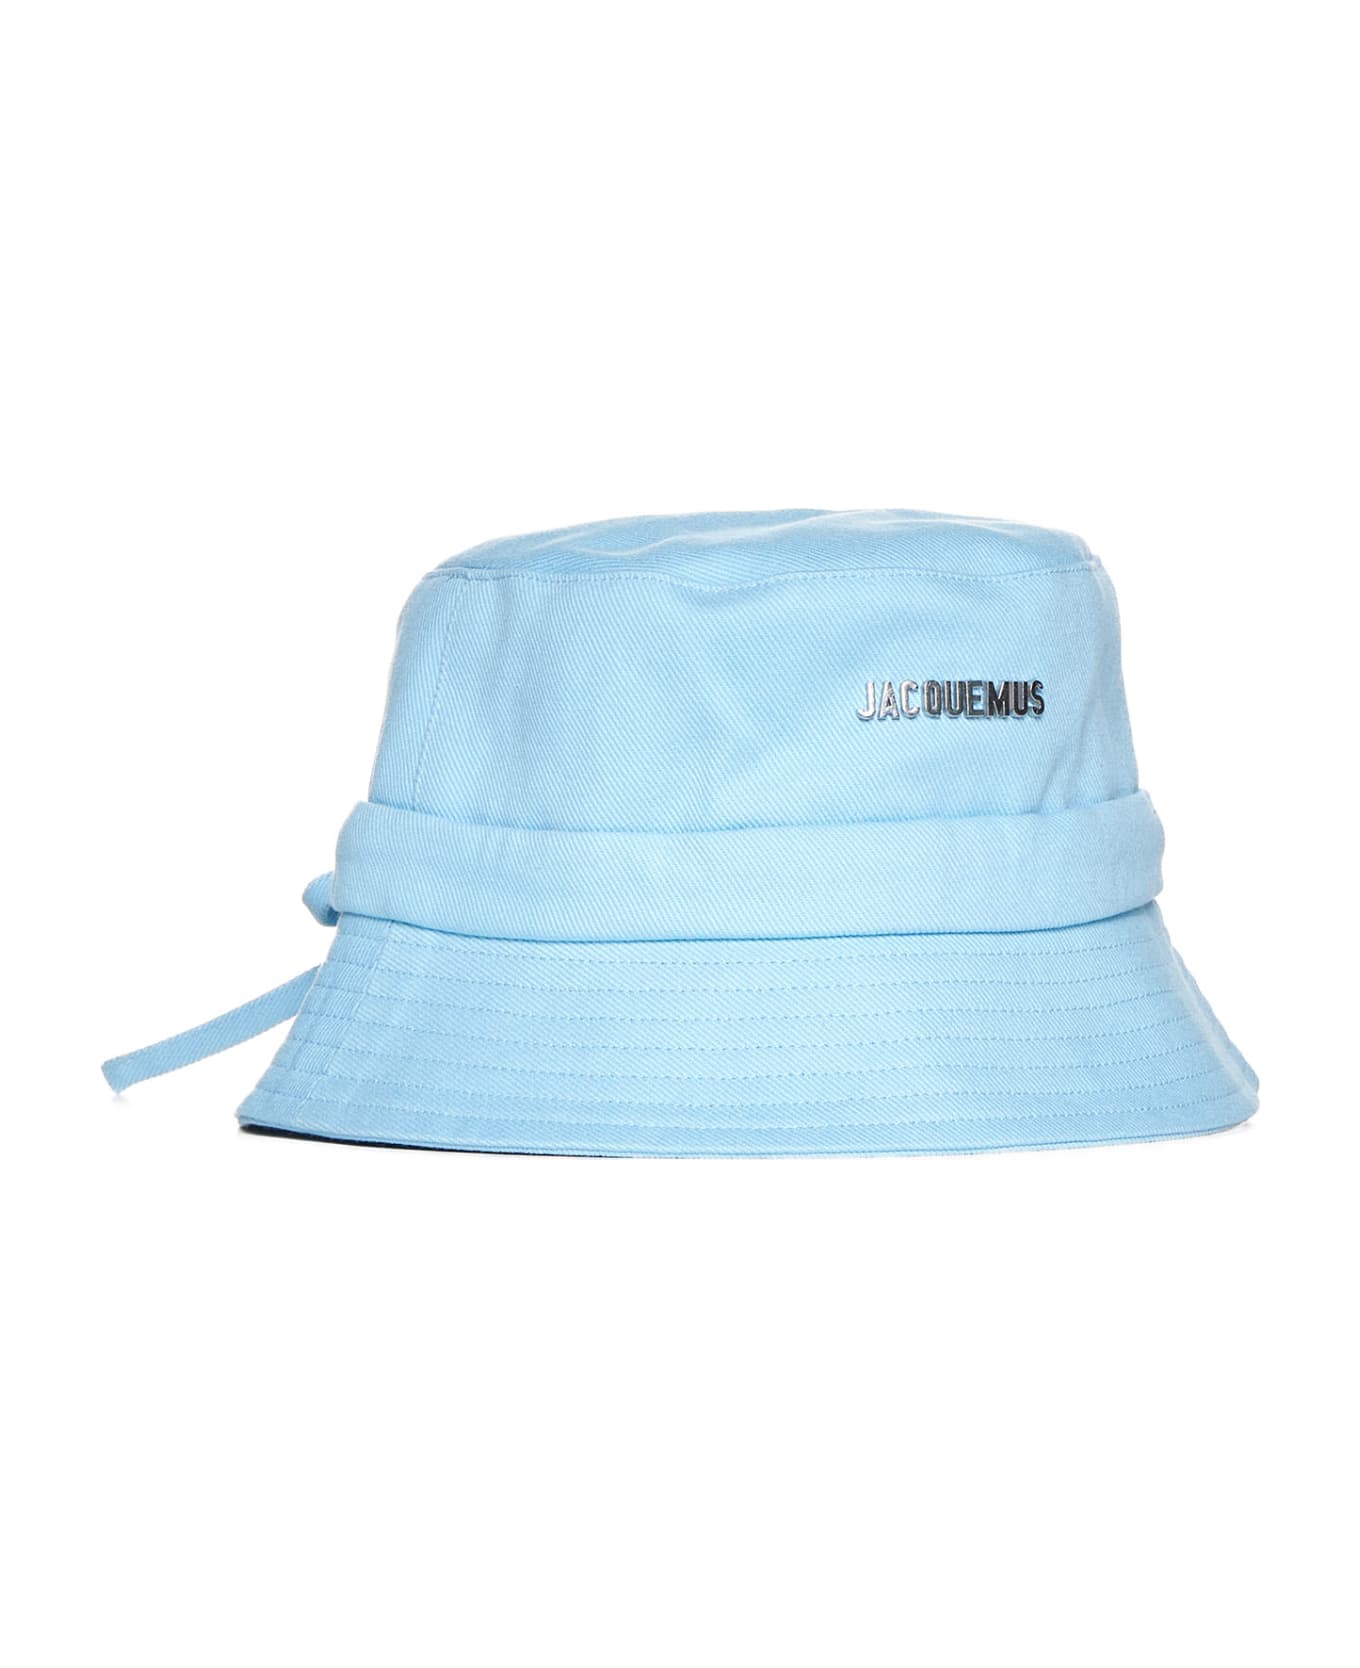 Jacquemus Hat - Blue 帽子